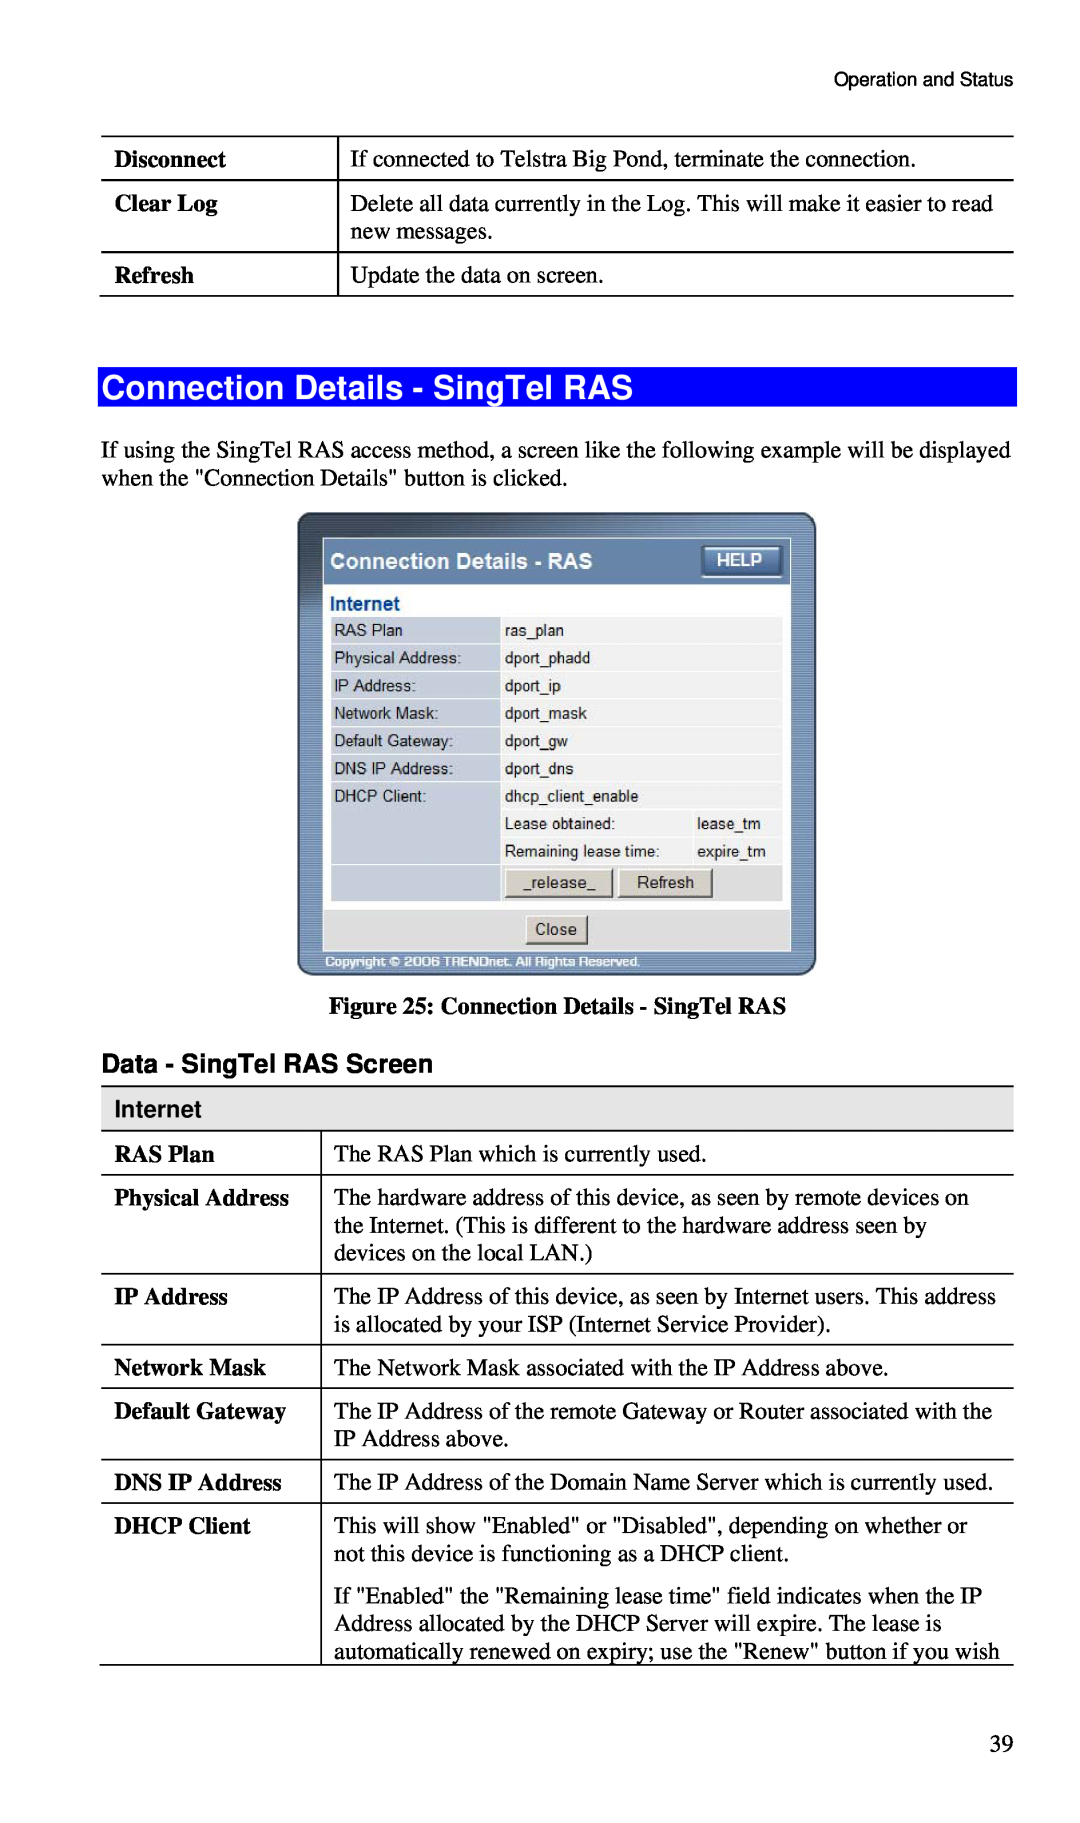 TRENDnet BRF114 Connection Details - SingTel RAS, Disconnect, Clear Log, Refresh, Internet, RAS Plan, Physical Address 